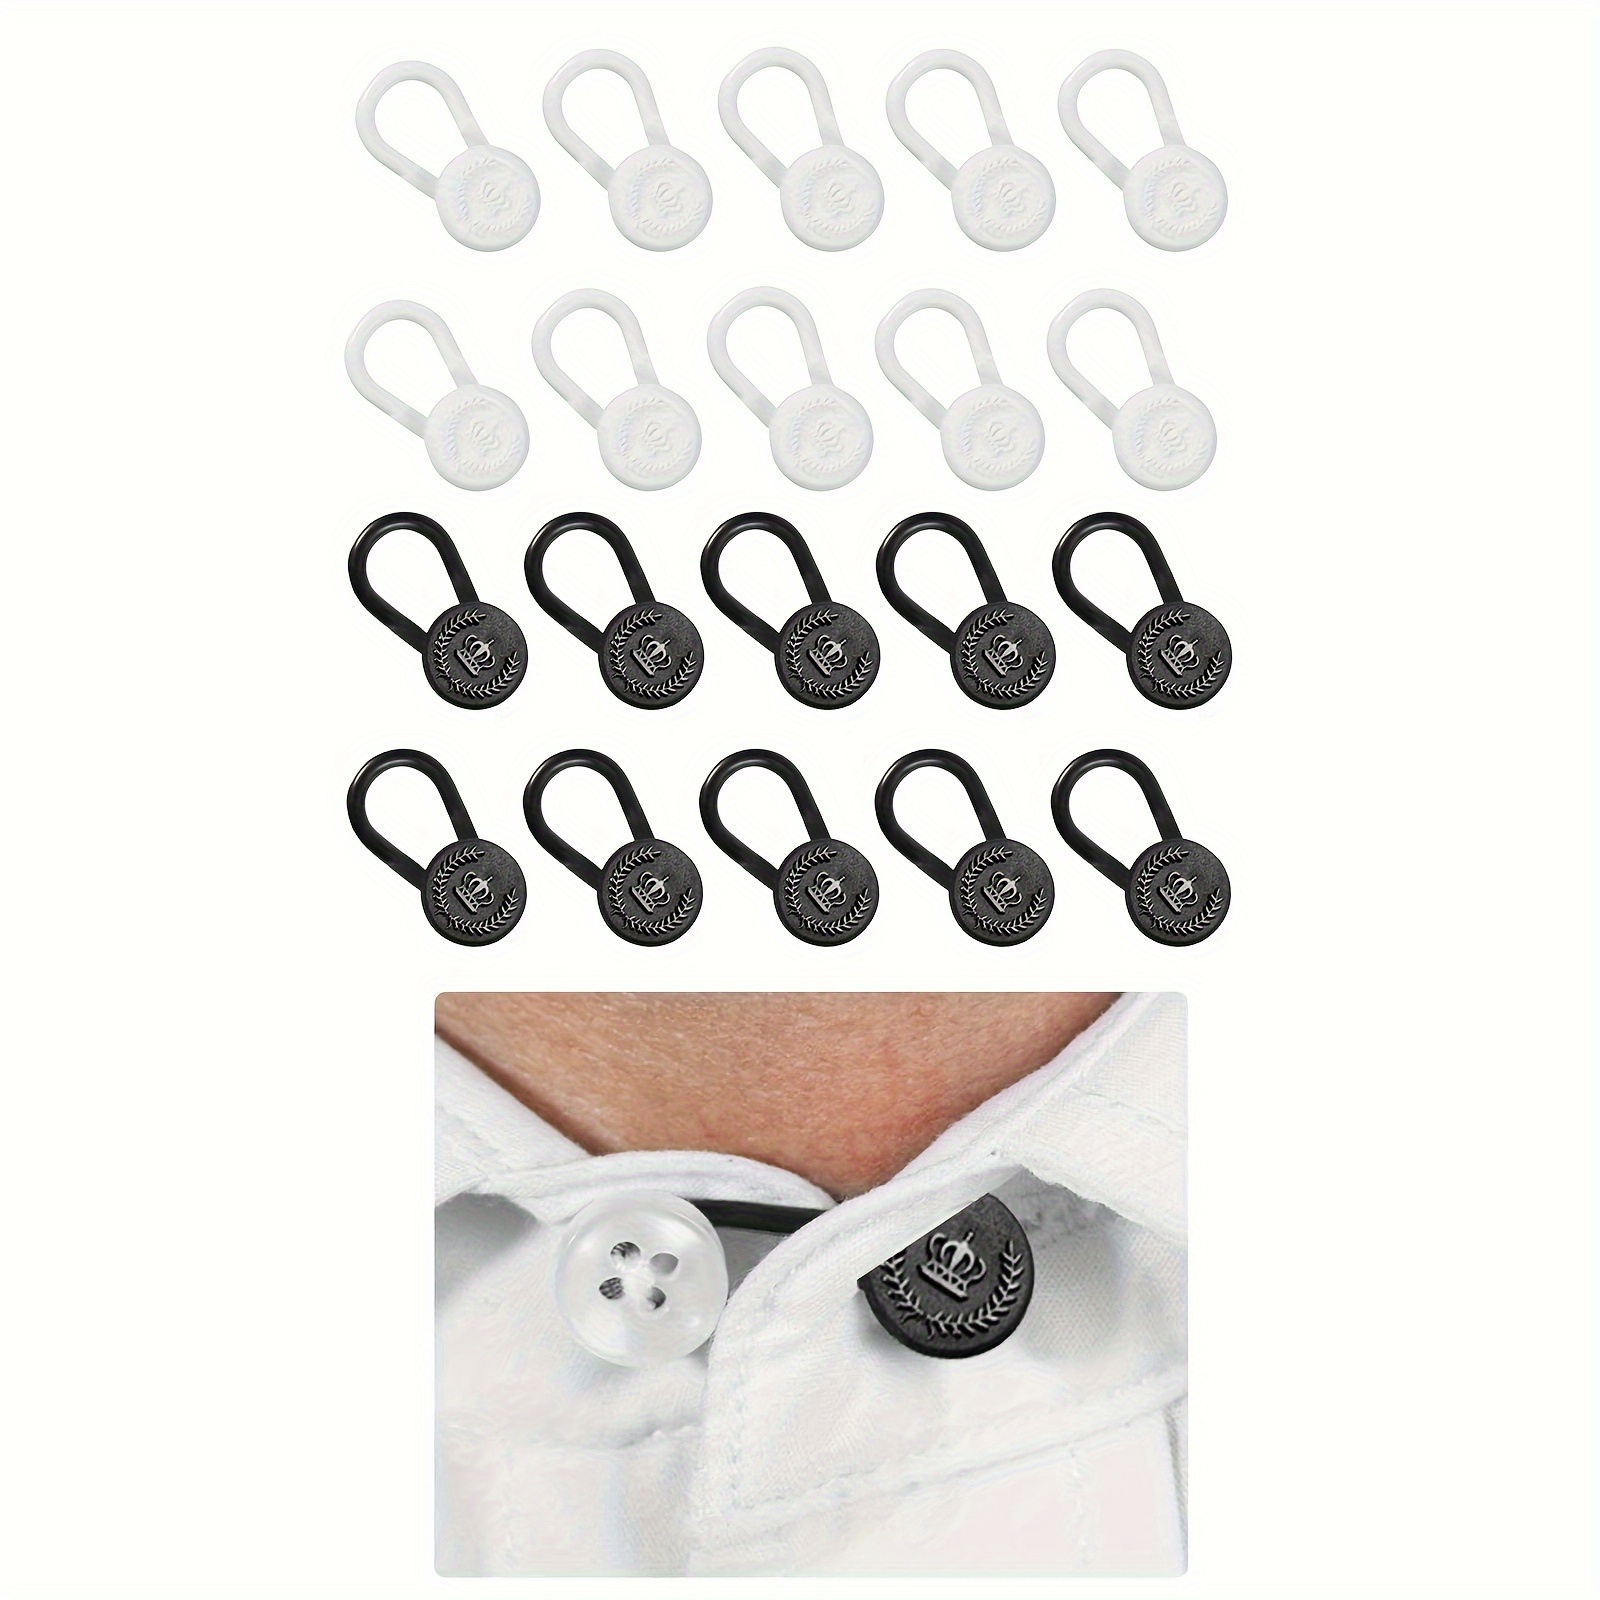 18 Pcs Collar Extenders TRIANU Neck Extender Elastic Wonder Button for  Expanding Length for Men Women Dress Shirts, Assorted Colors 